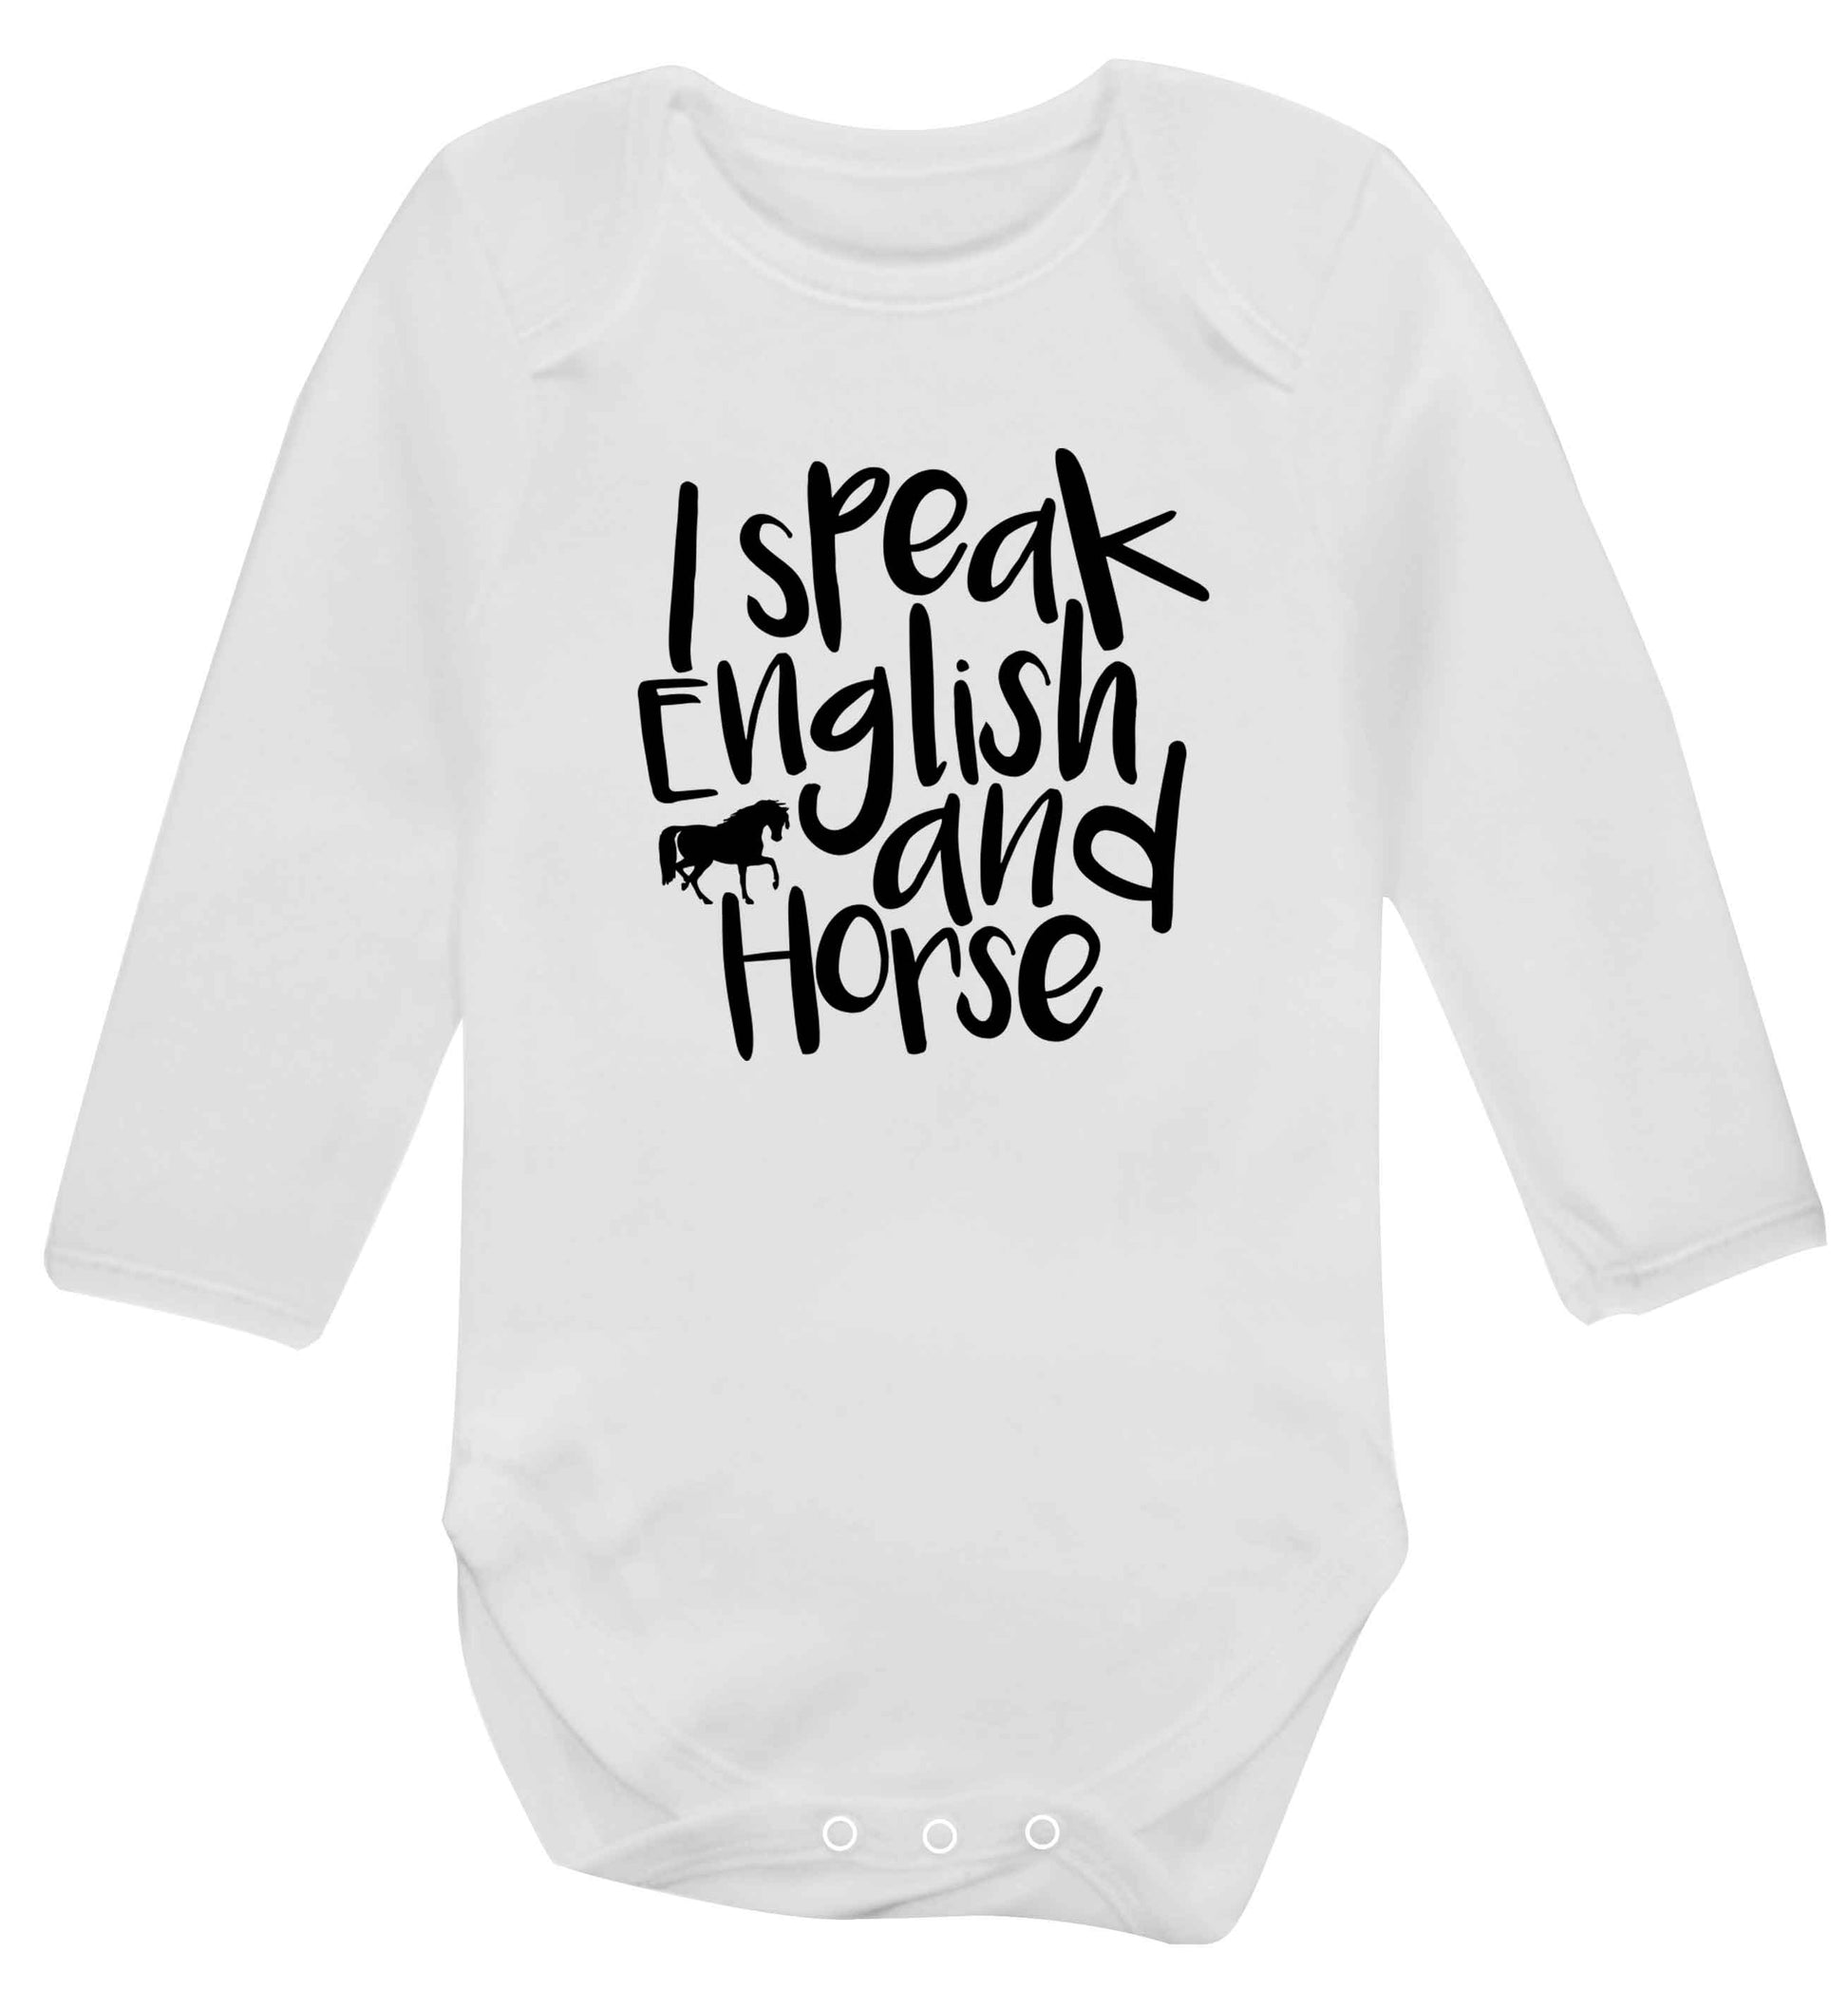 I speak English and horse baby vest long sleeved white 6-12 months